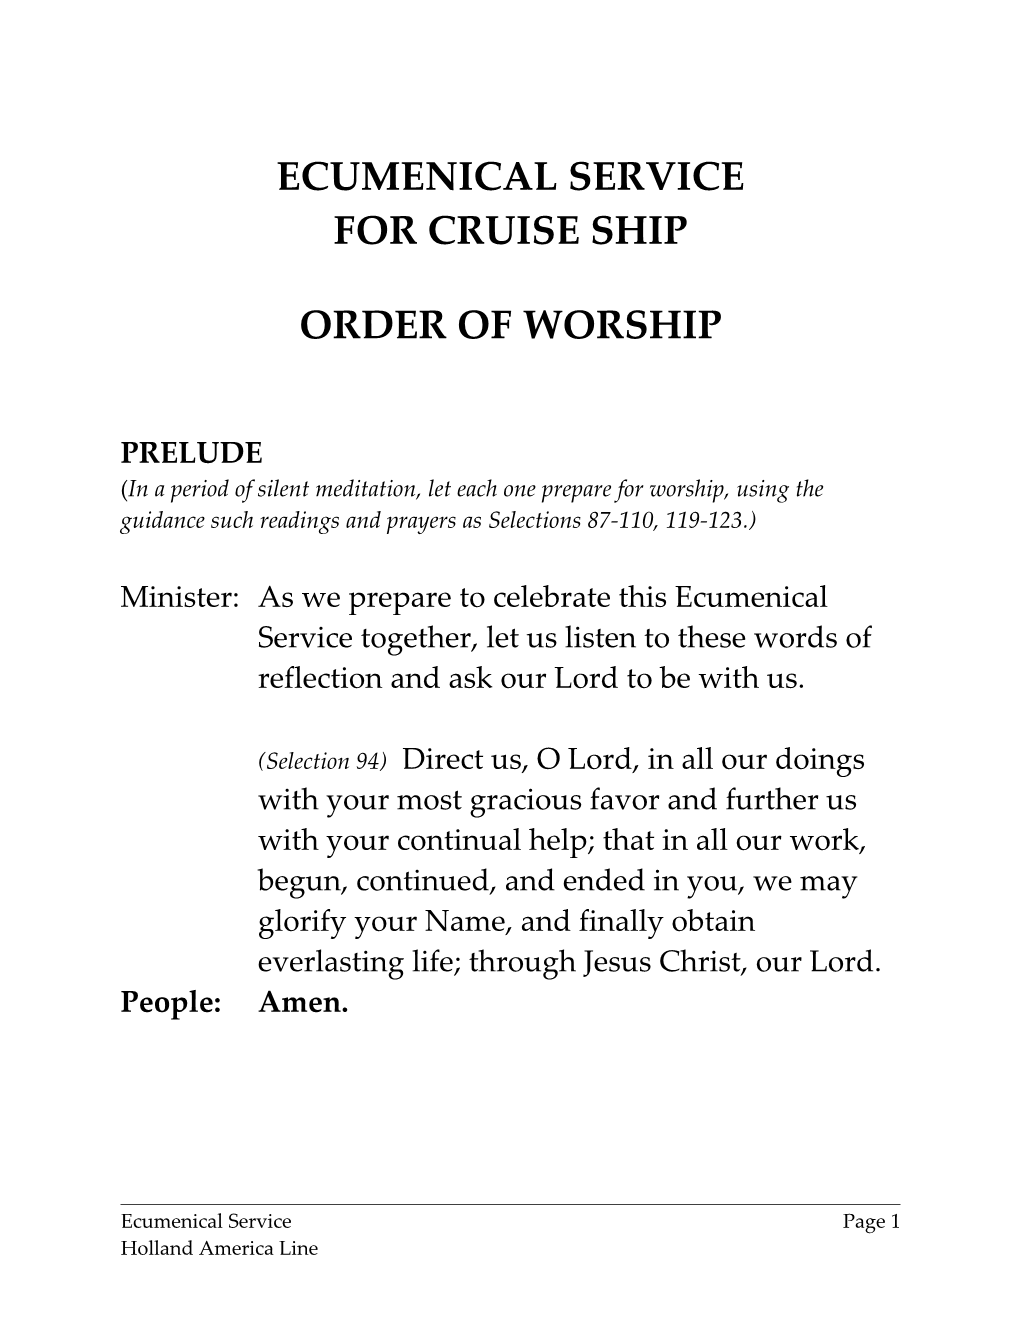 Ecumenical Service